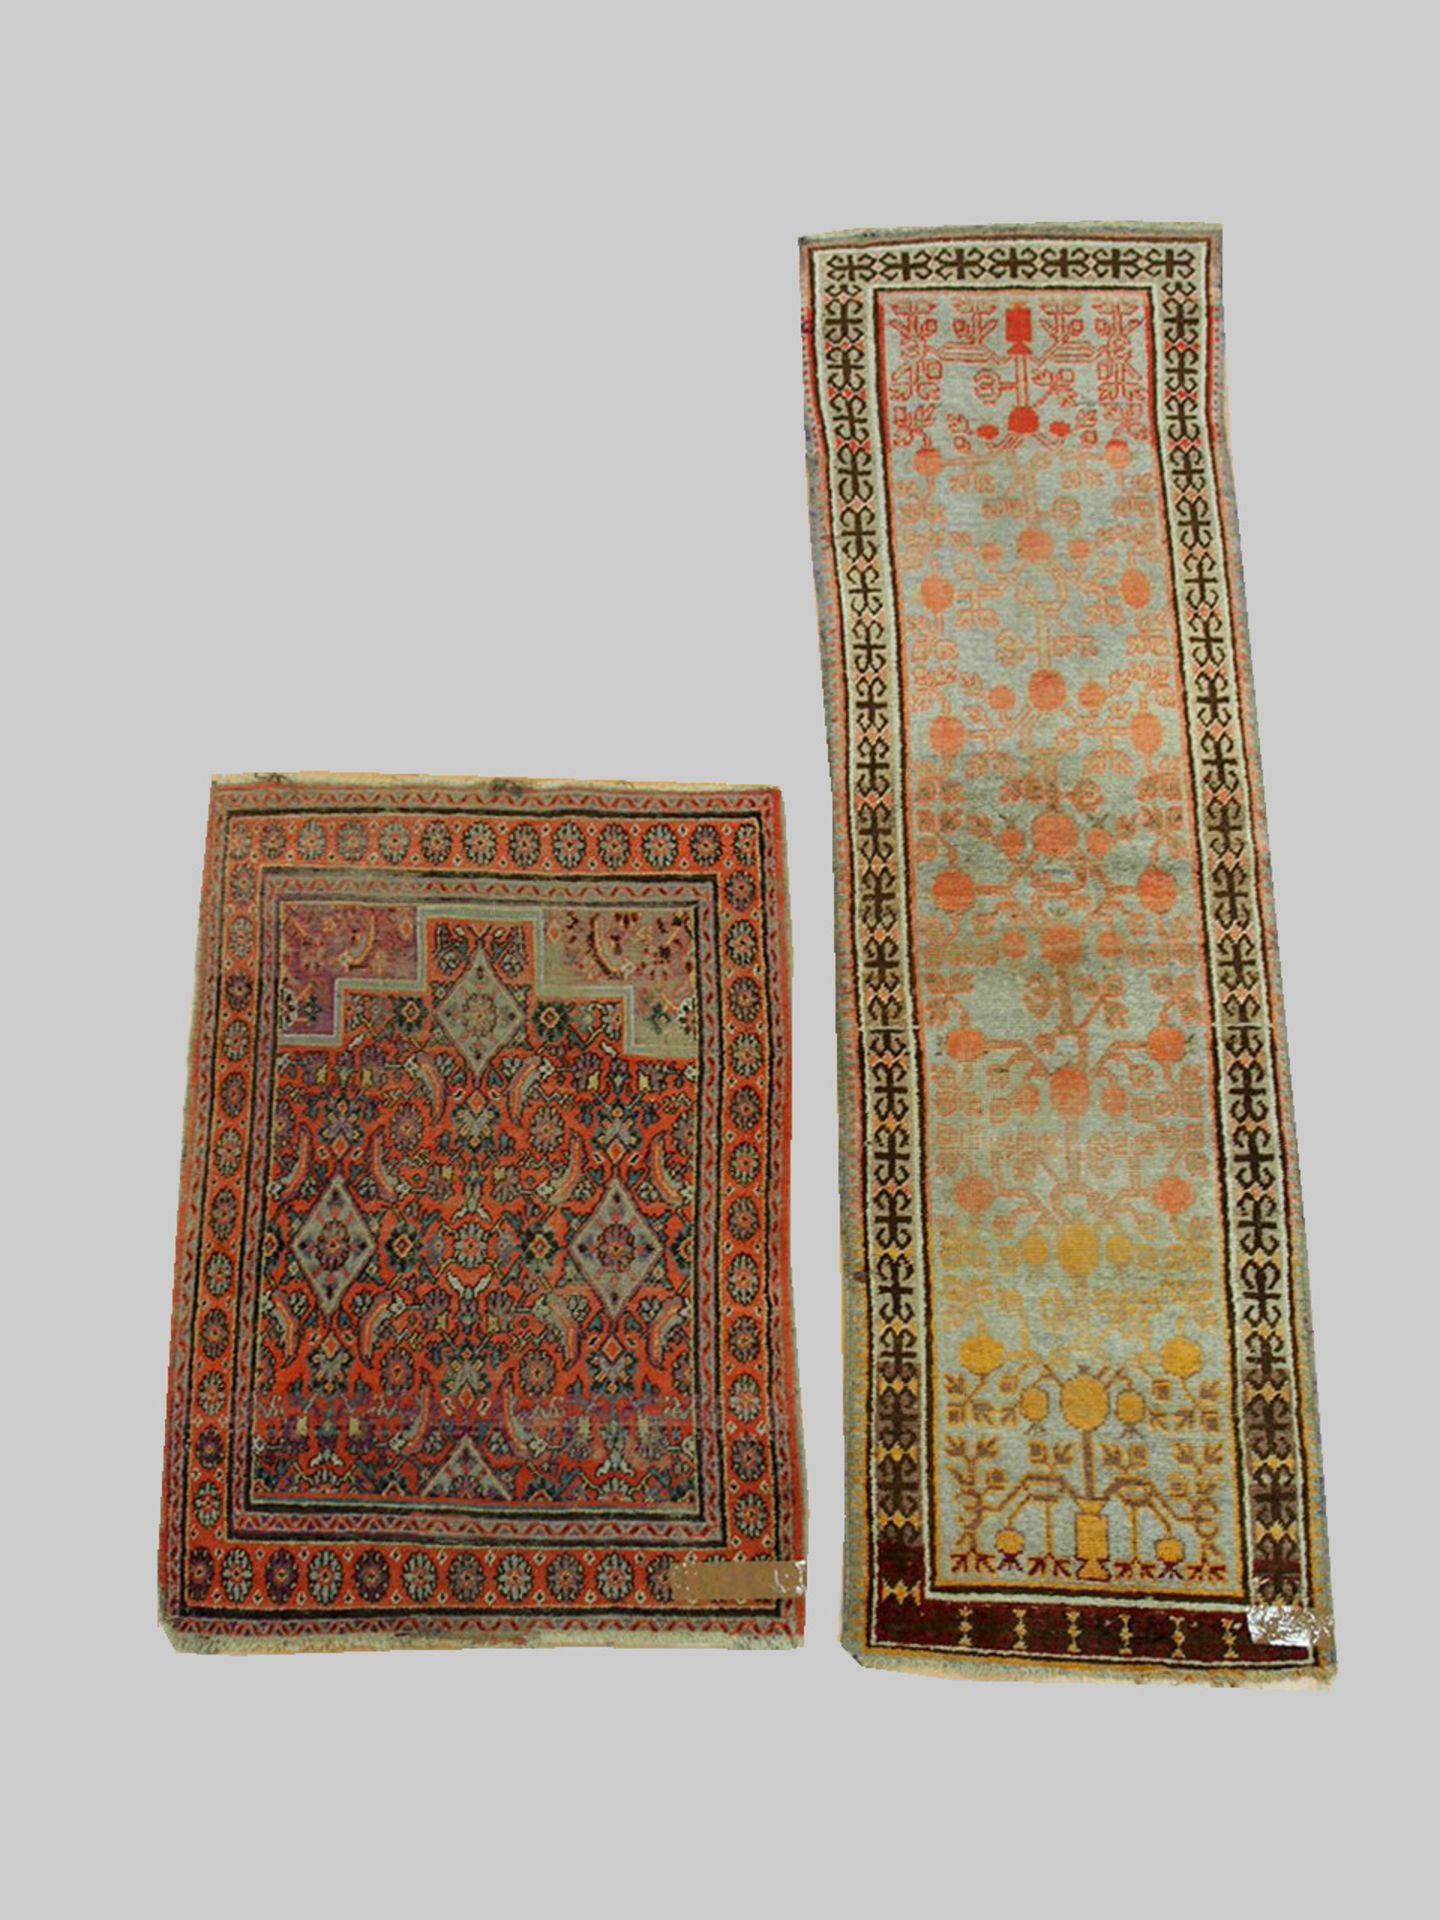 2 Samarkand, um 1900, 130 x 90 cm bzw. 233 x 65 cm, Zustand C/D